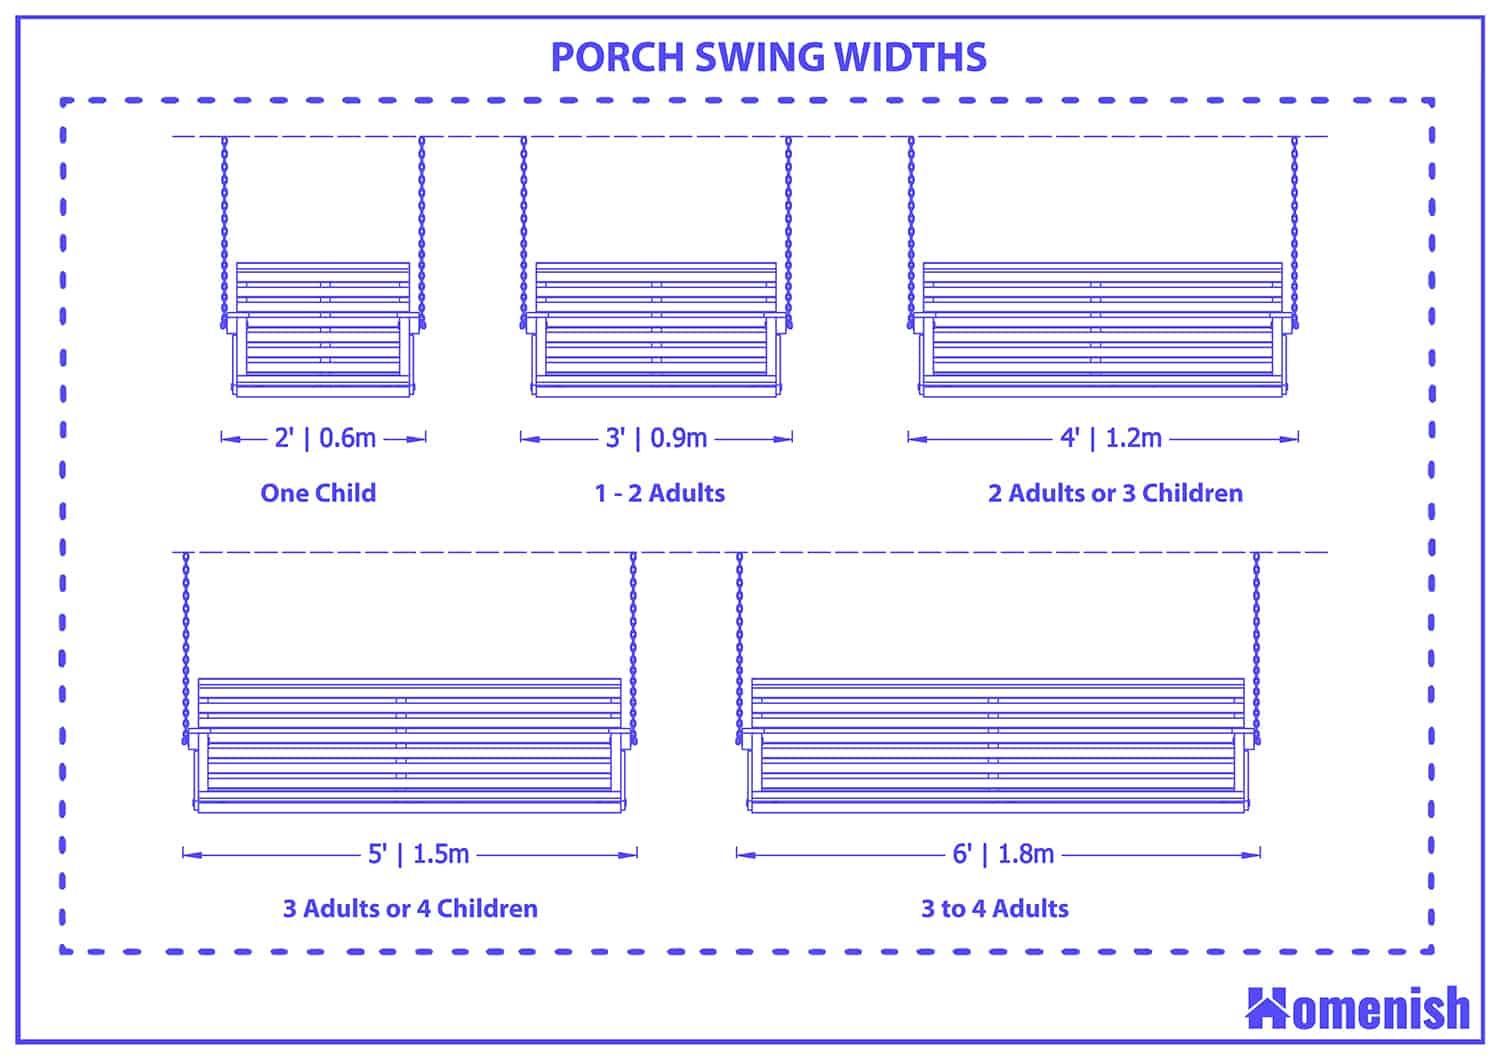 Porch swing widths